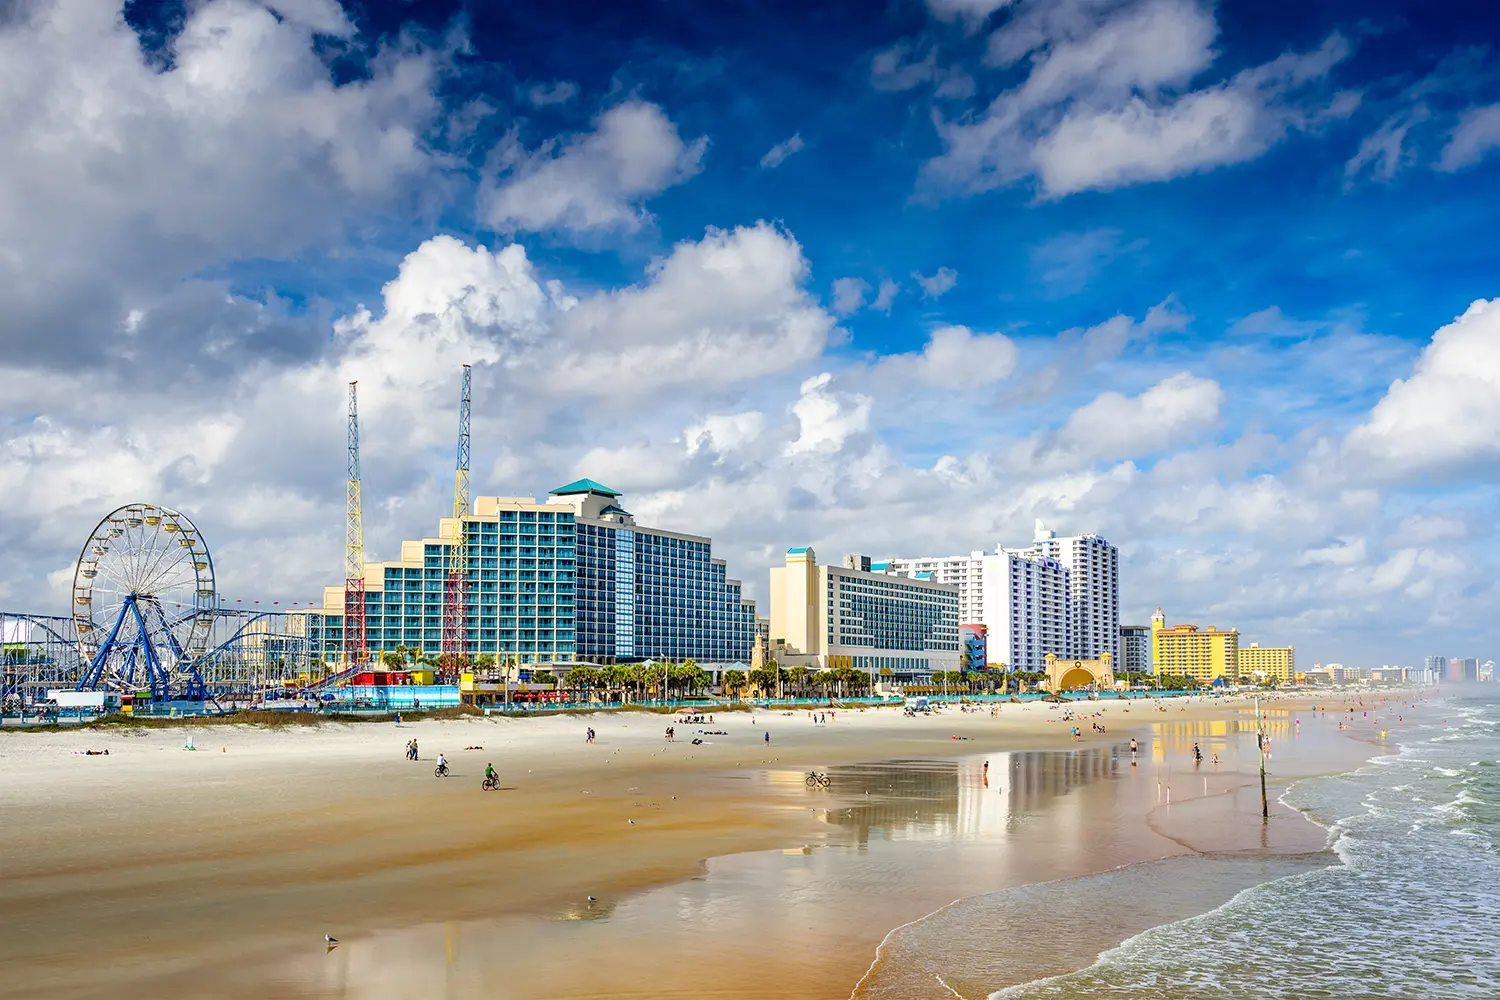 Beachfront of Daytona Beach, Florida, USA